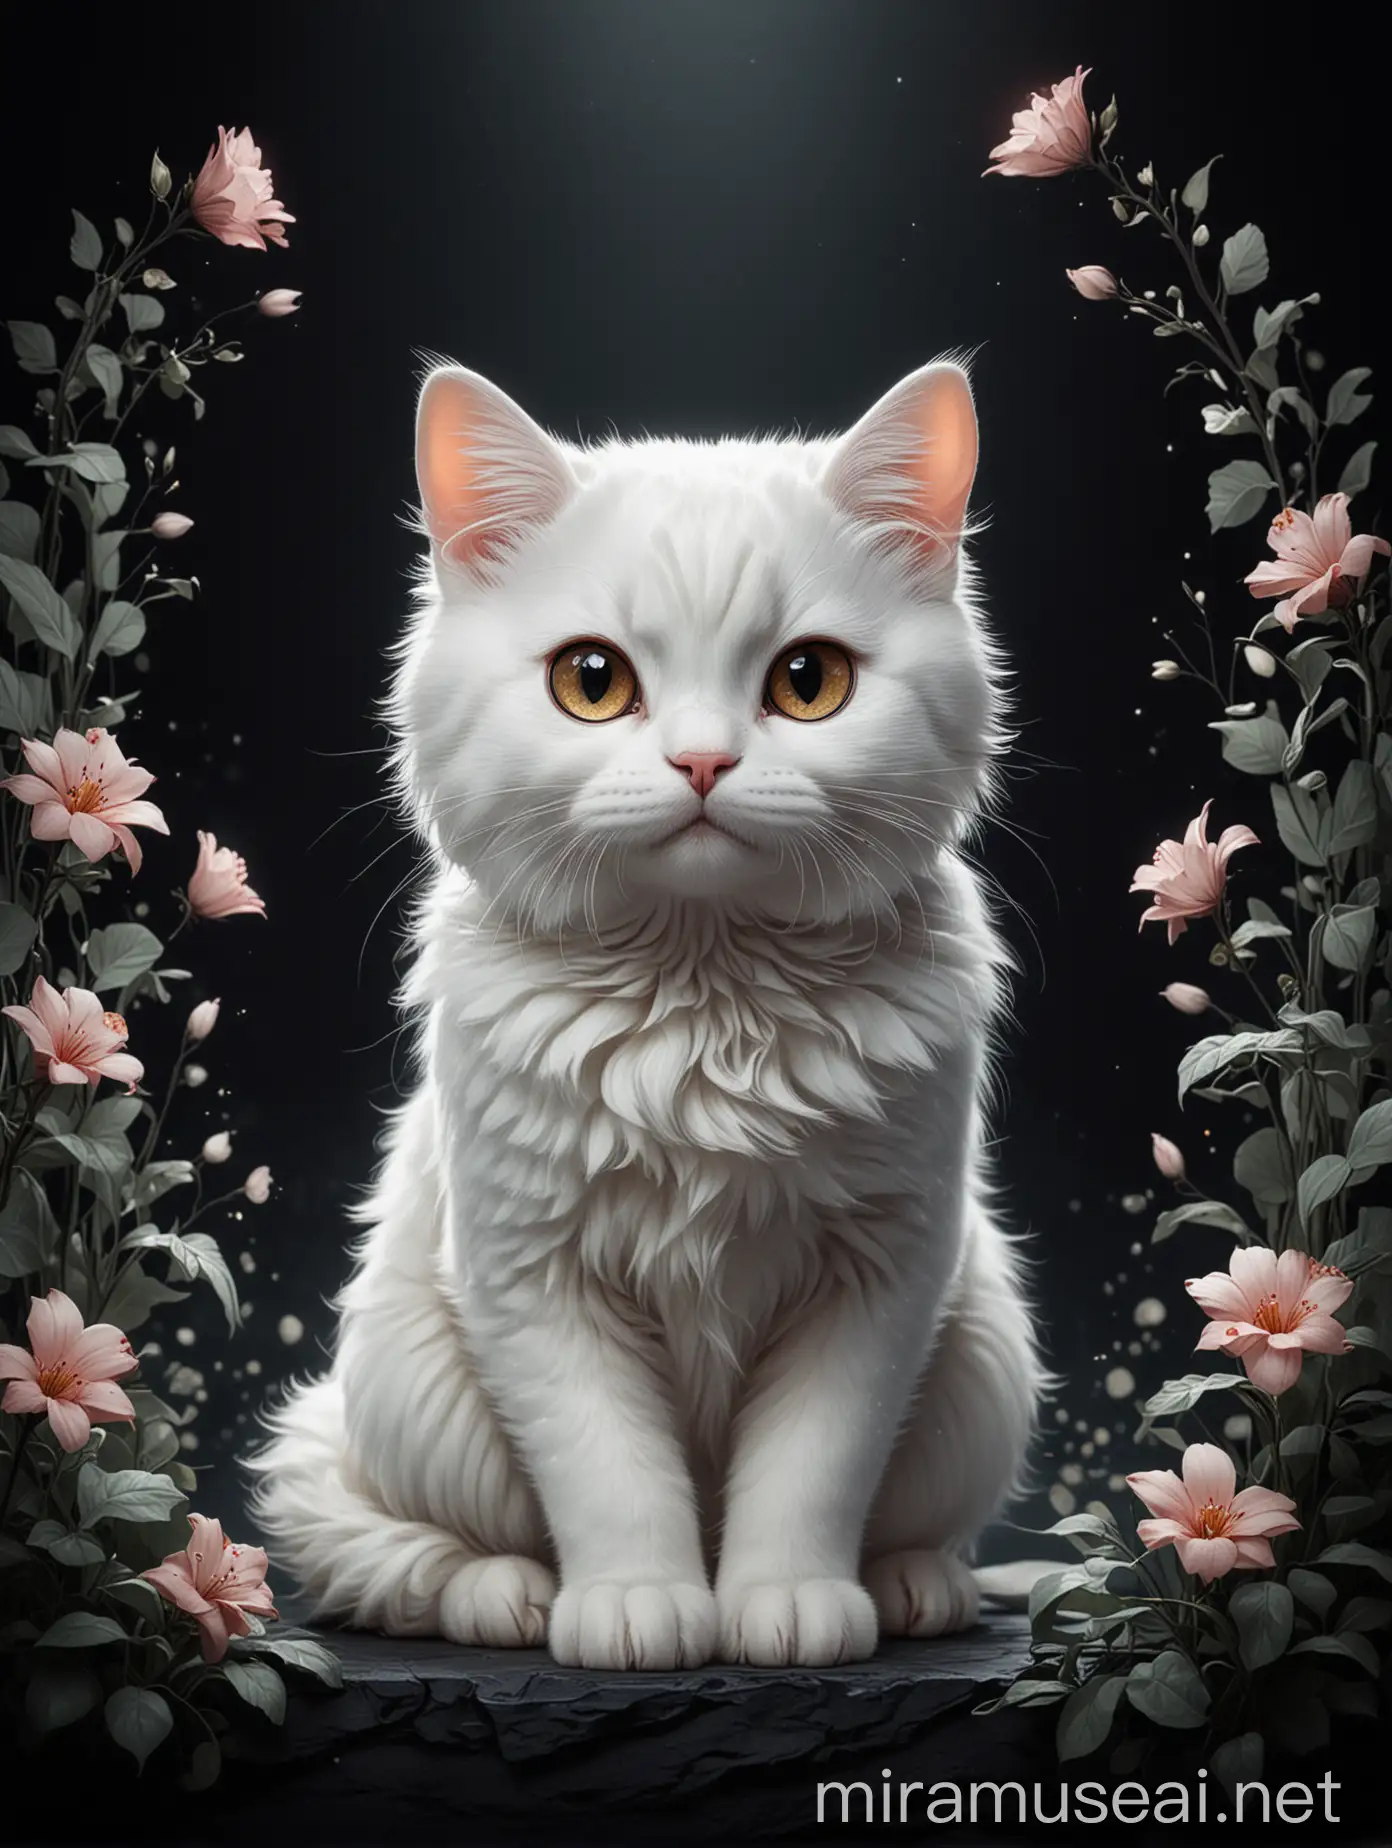 Adorable White Cat NFT Illustration on Mysterious Dark Background